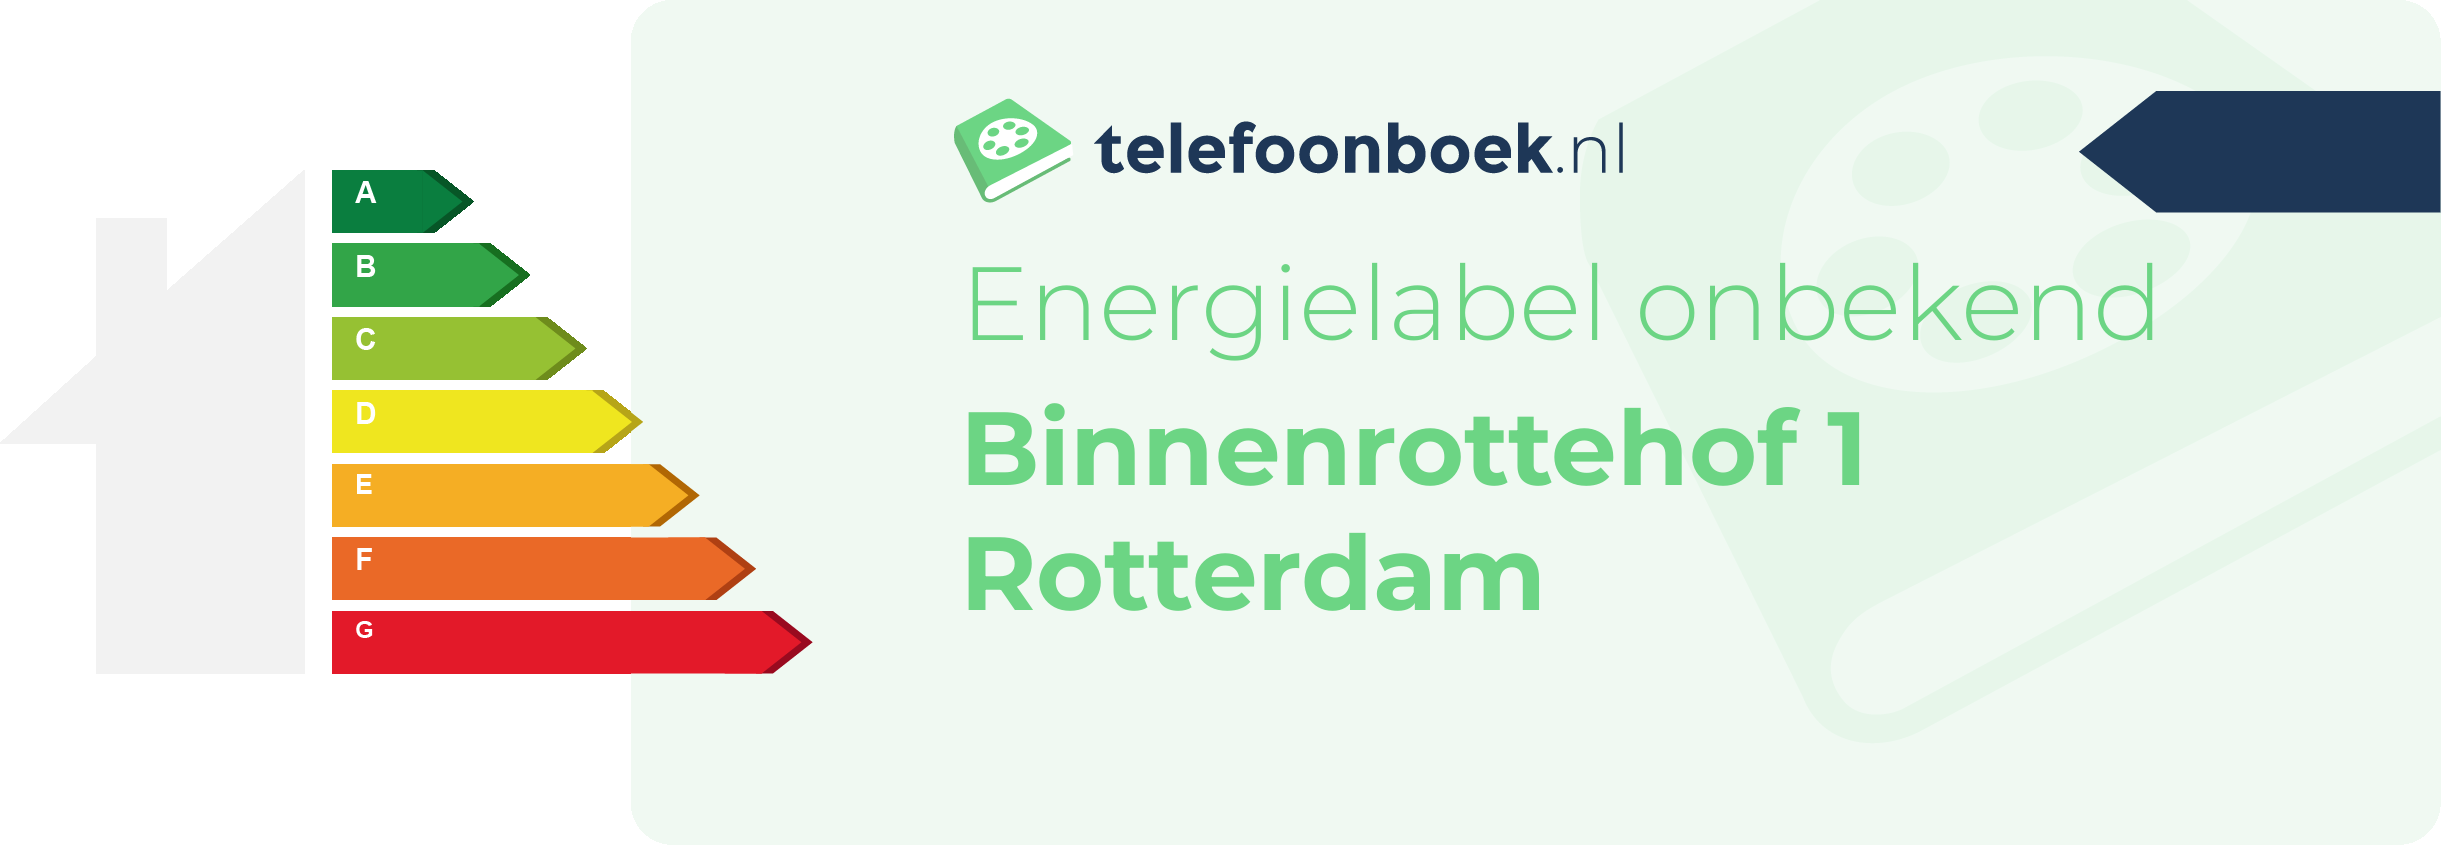 Energielabel Binnenrottehof 1 Rotterdam